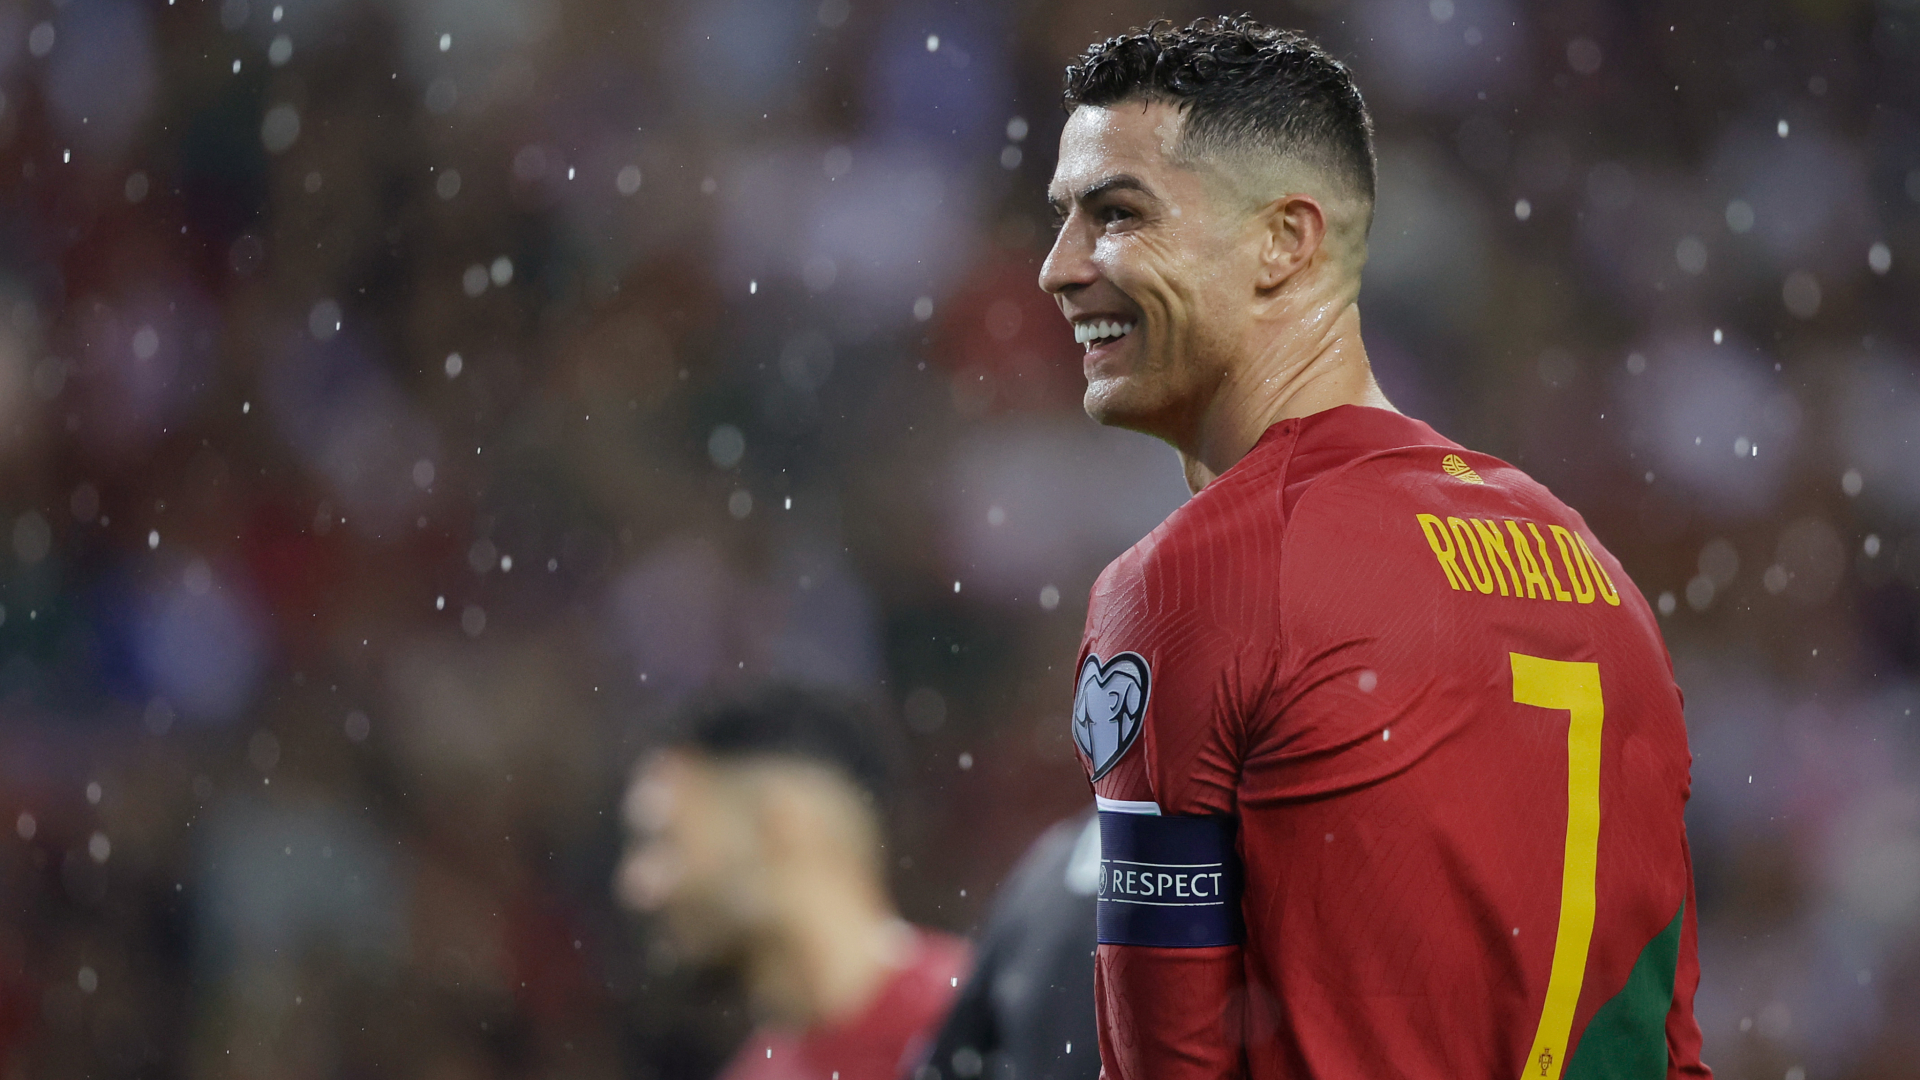 Ronaldo in Portugal's Euros squad